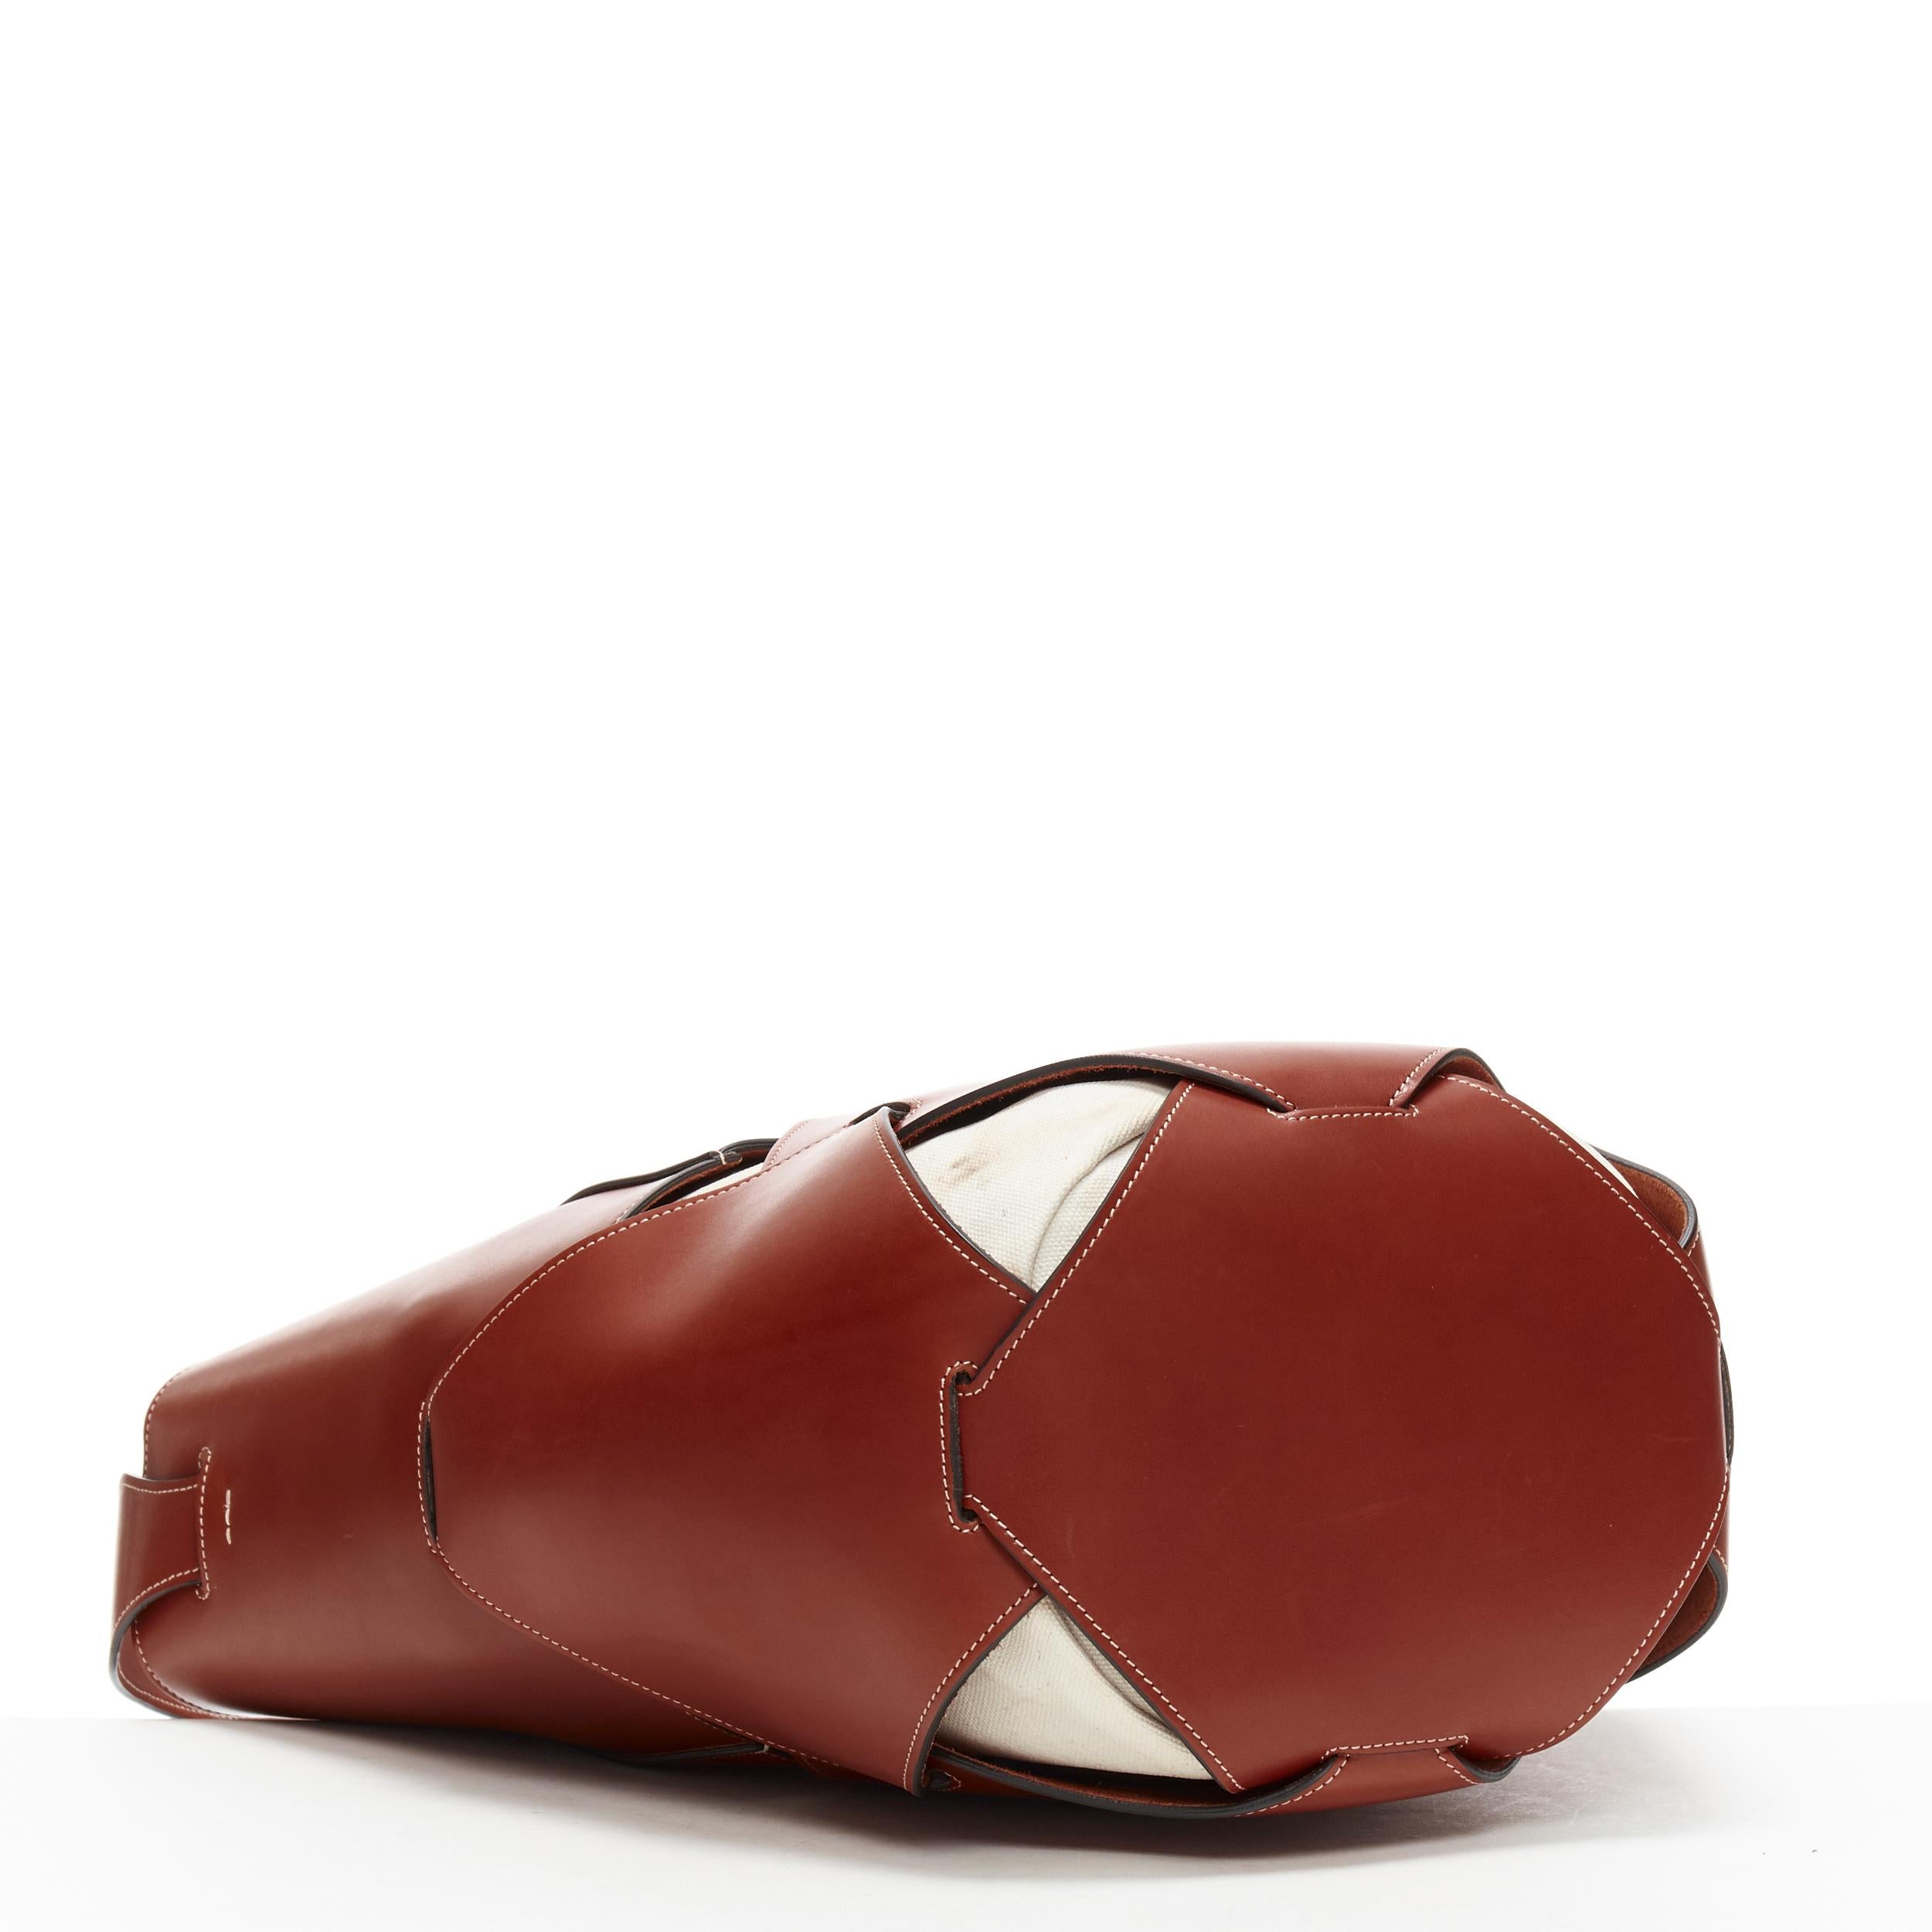 Brown CELINE PHOEBE PHILO brown calf leather woven base canvas lined shoulder bag